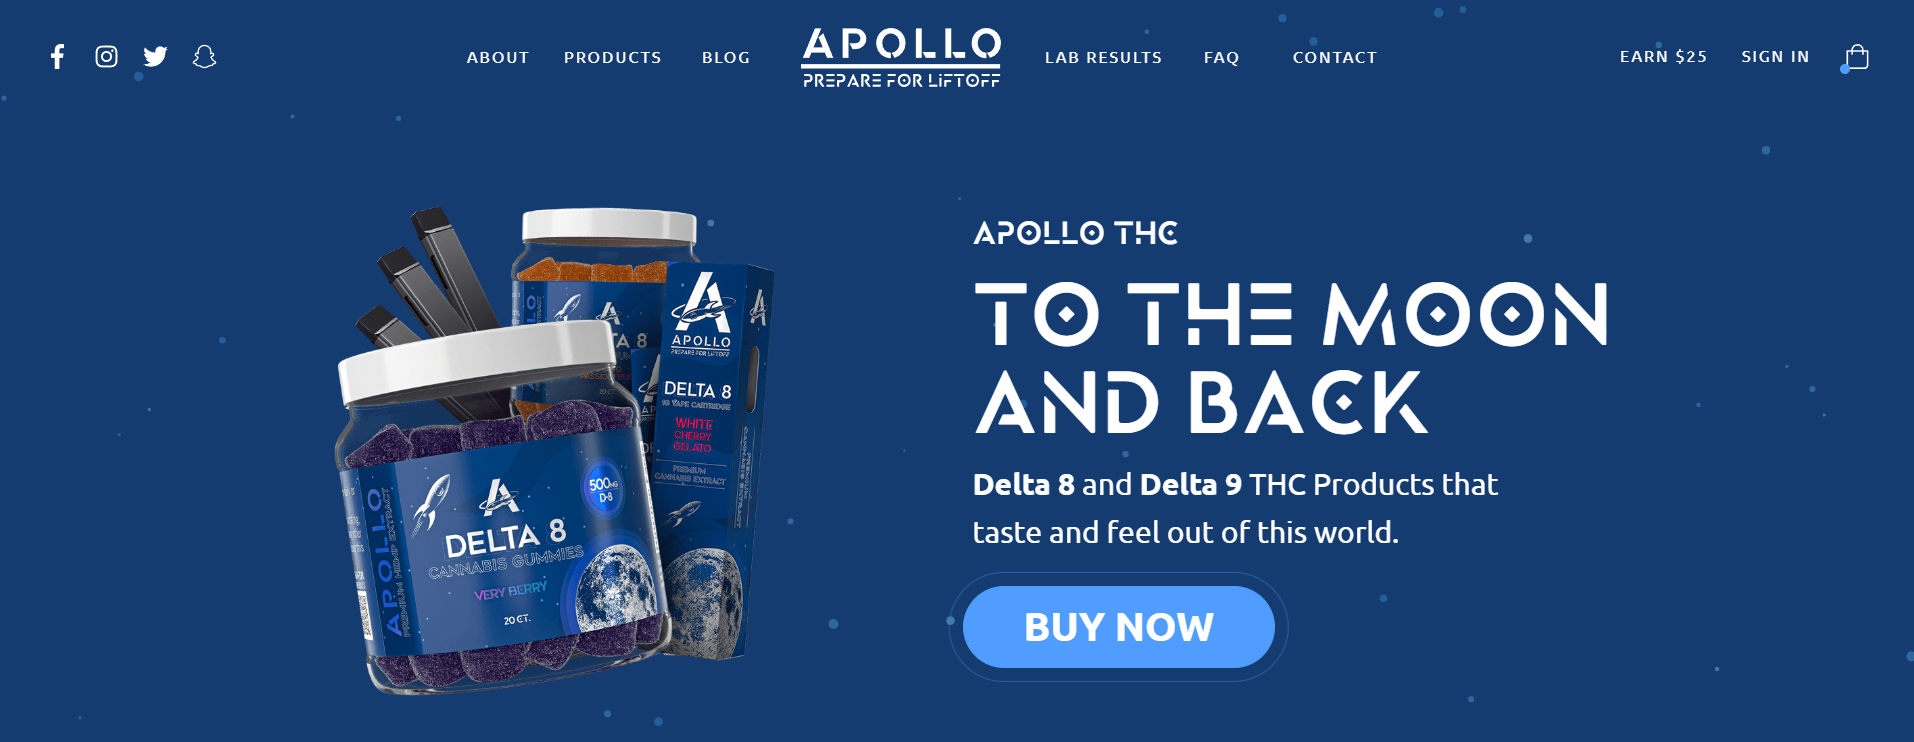 Apollo Affiliate Program Homepage Image